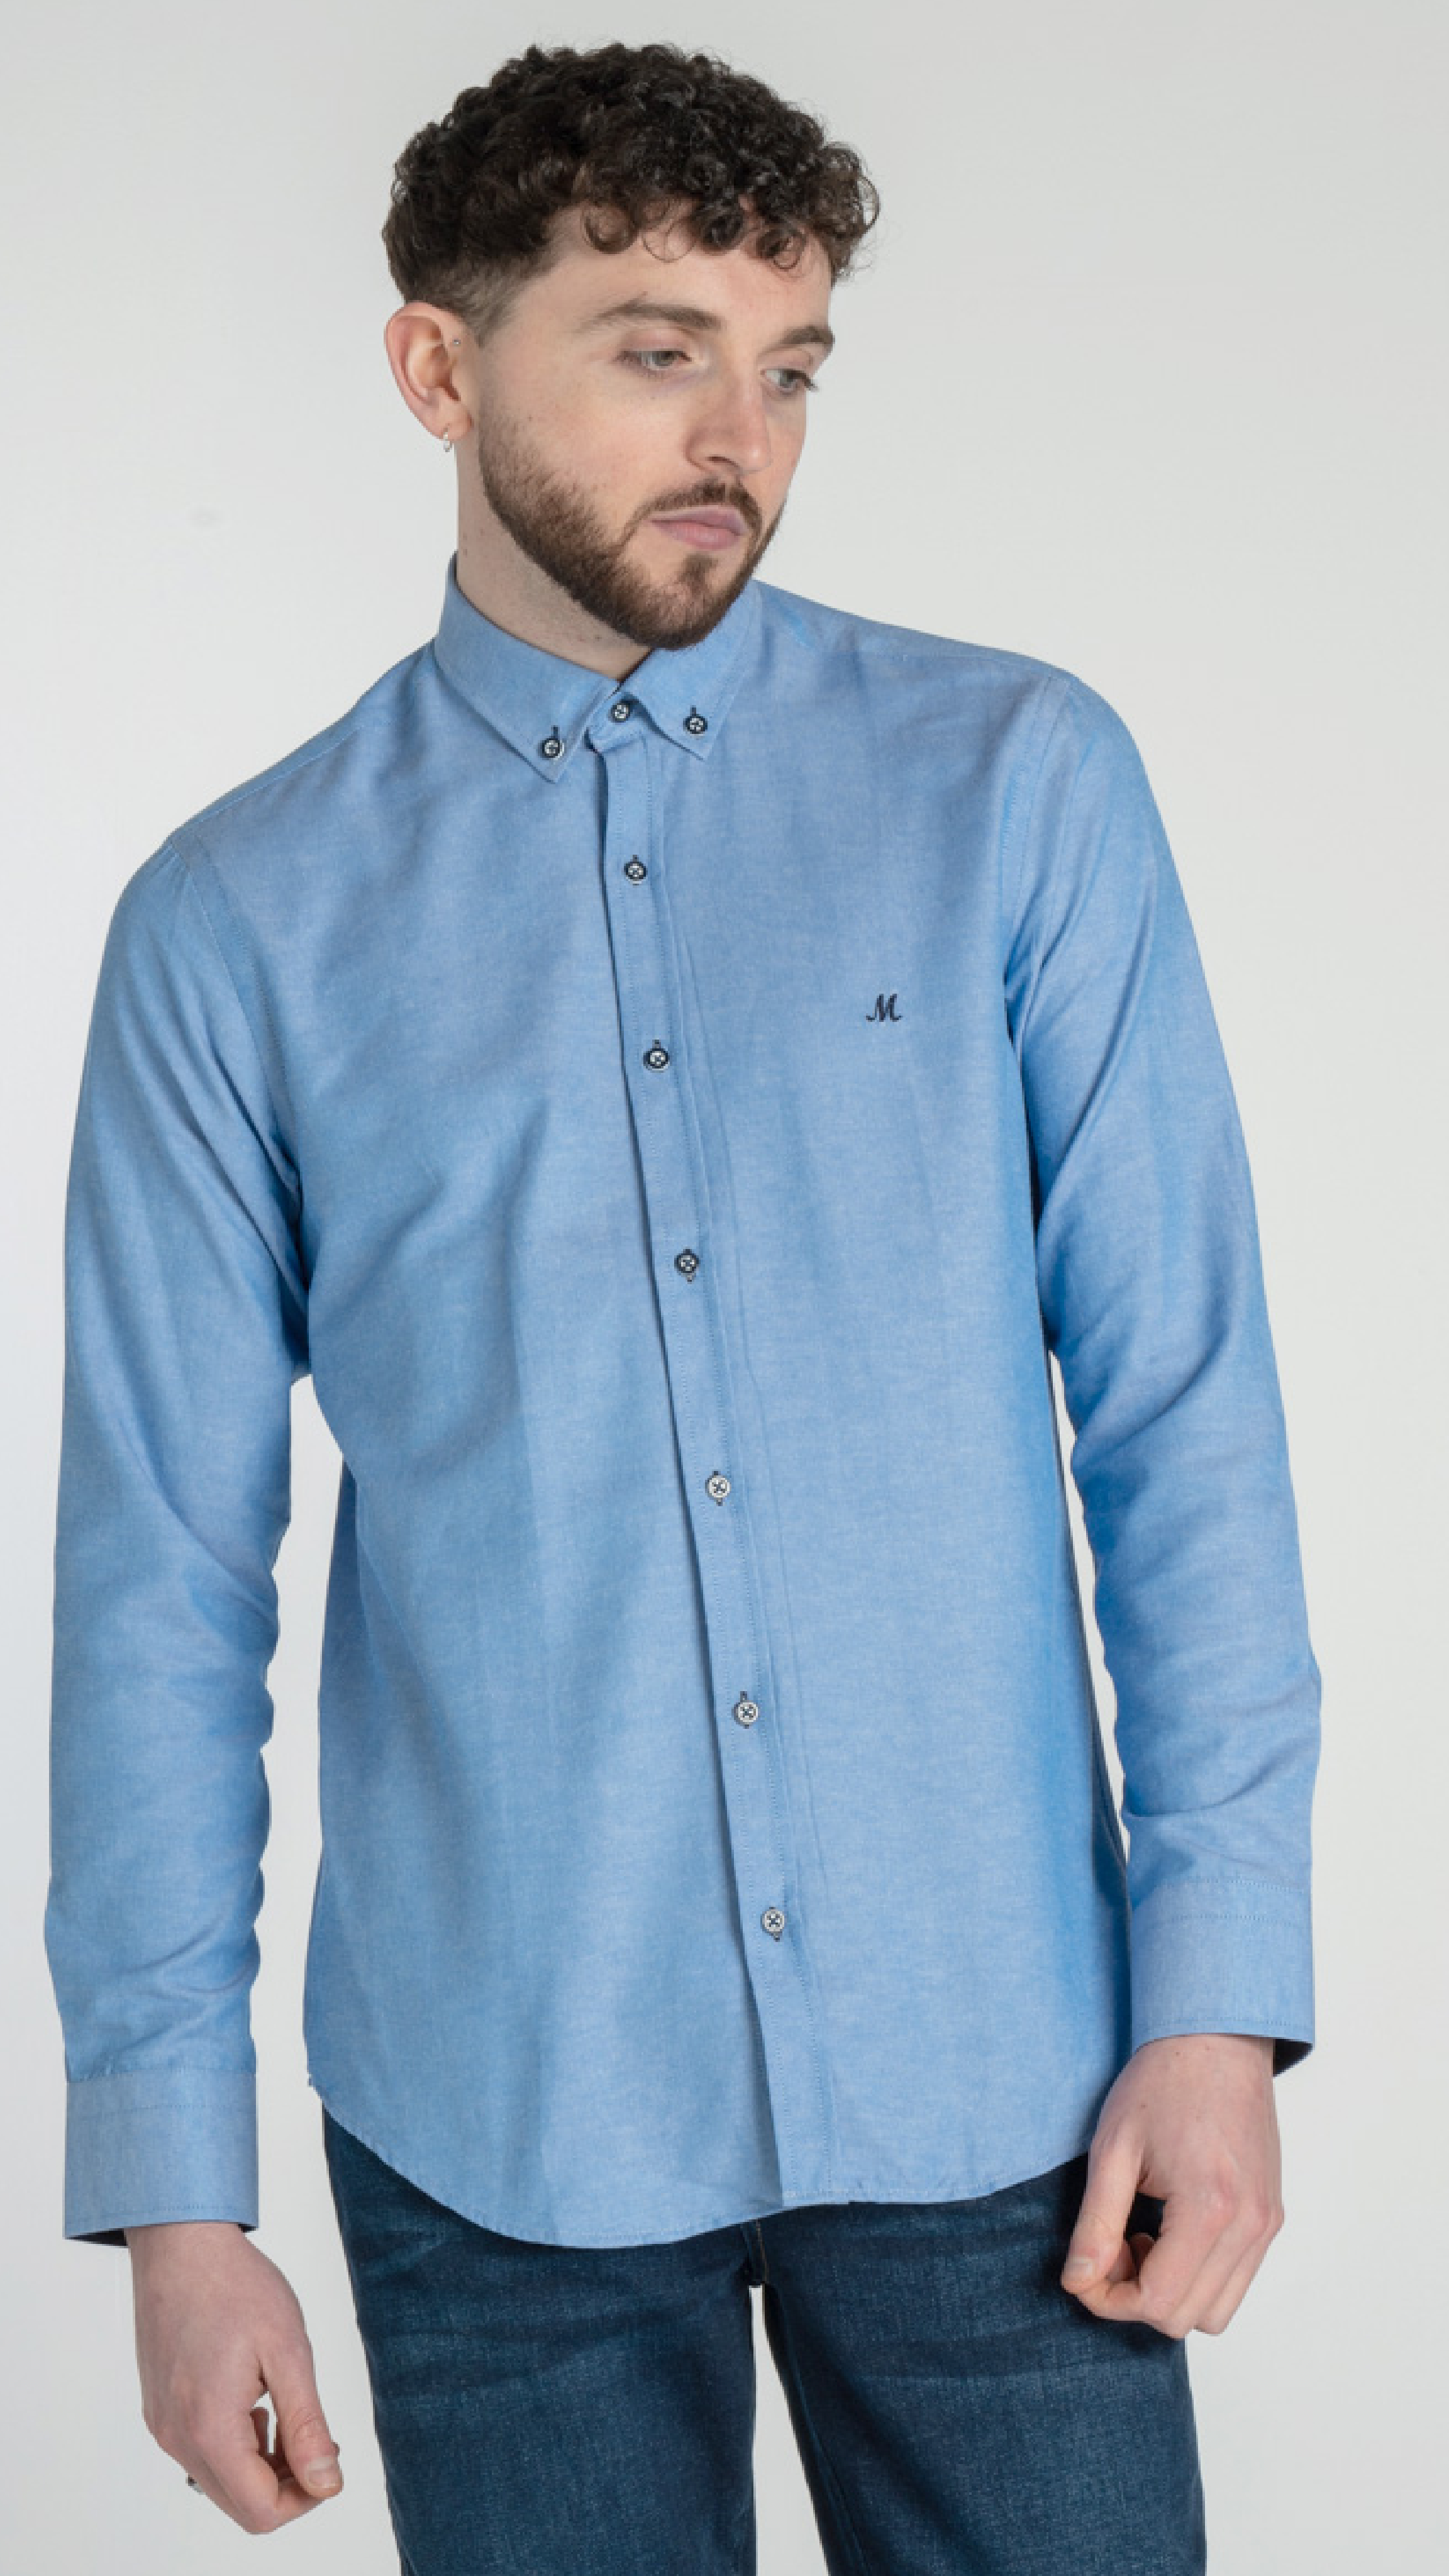 Lolland Chambray Blue Oxford Shirt